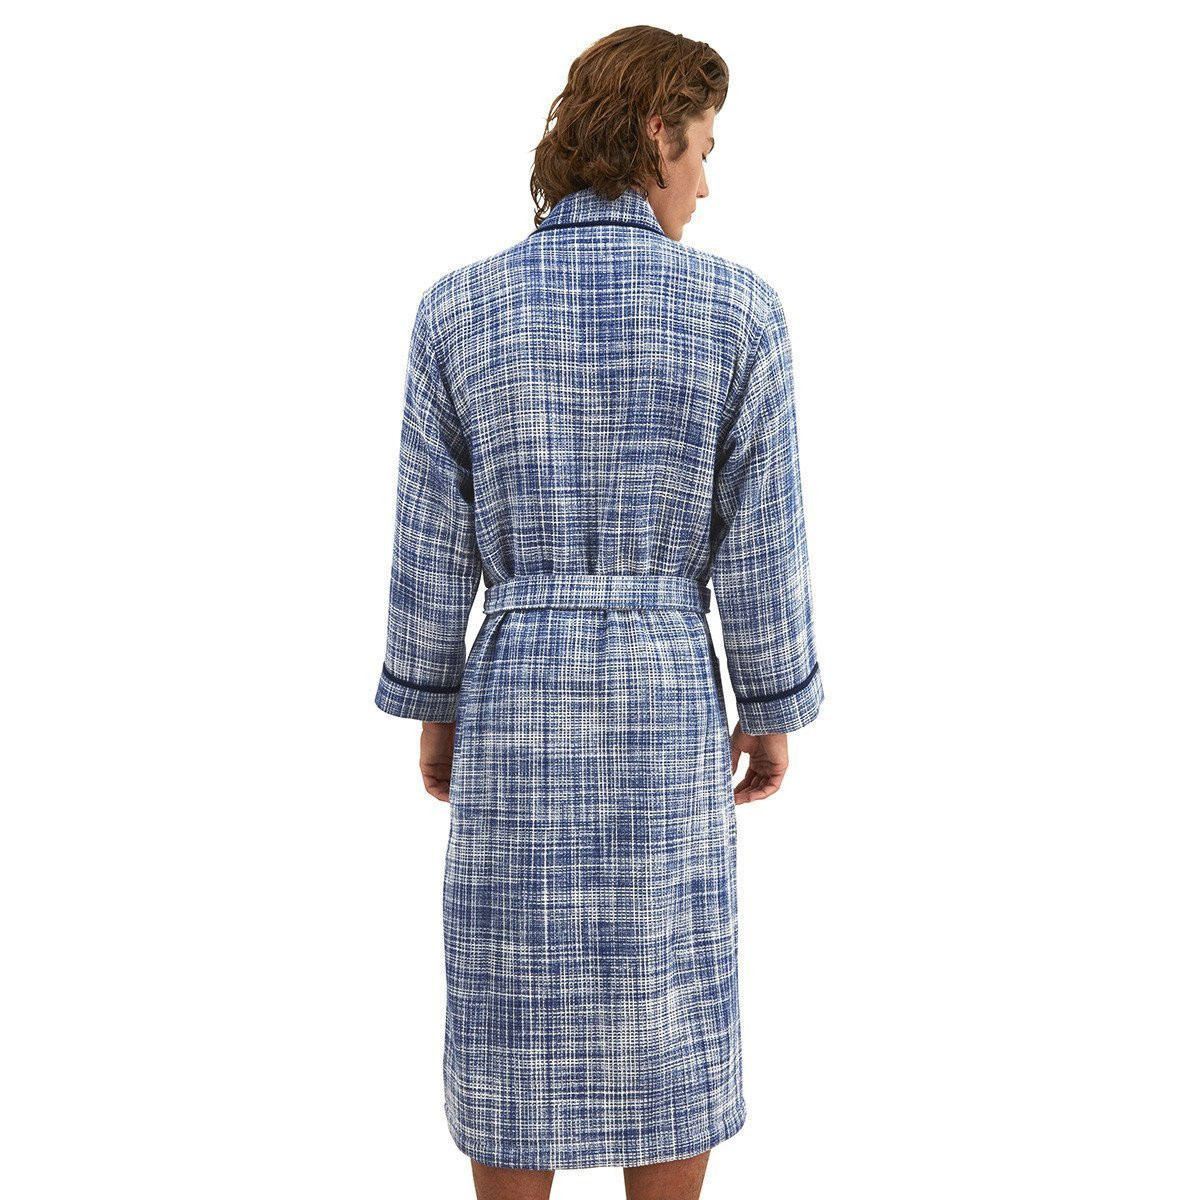 халат кимоно Yves Delorme Leo - купить в магазине Yves Delorme Russia